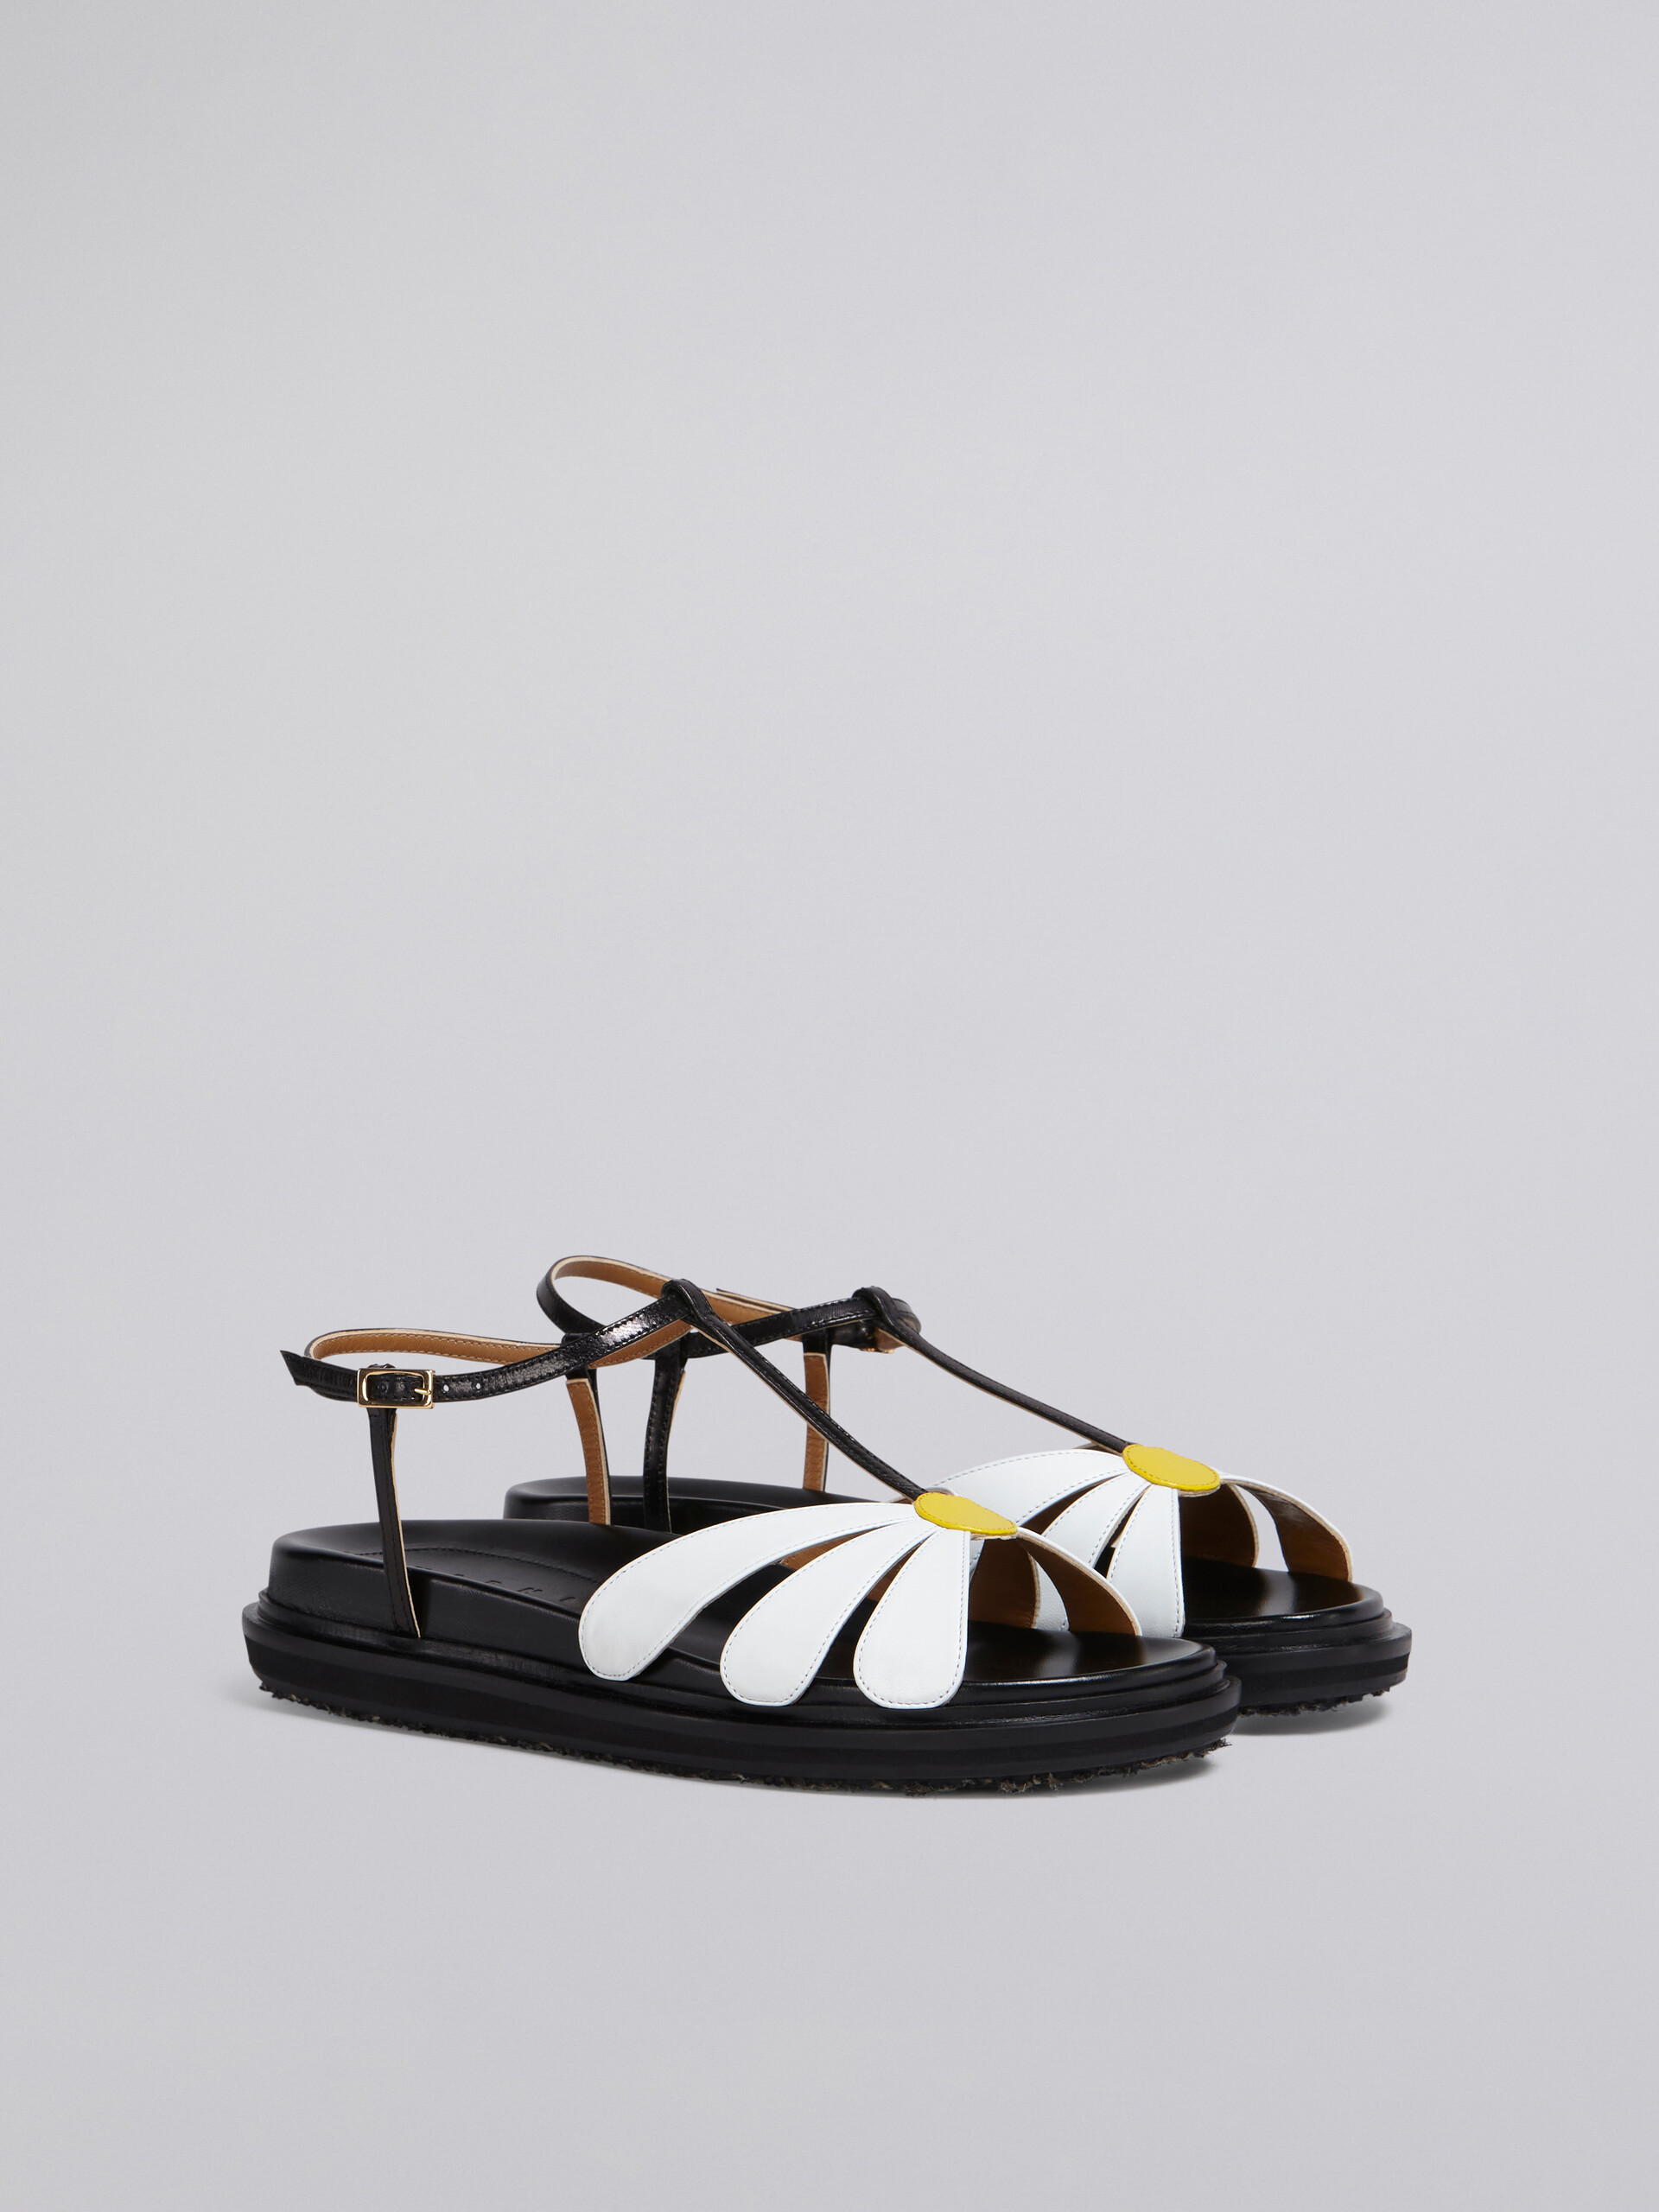 Leather flower fussbett - Sandals - Image 2